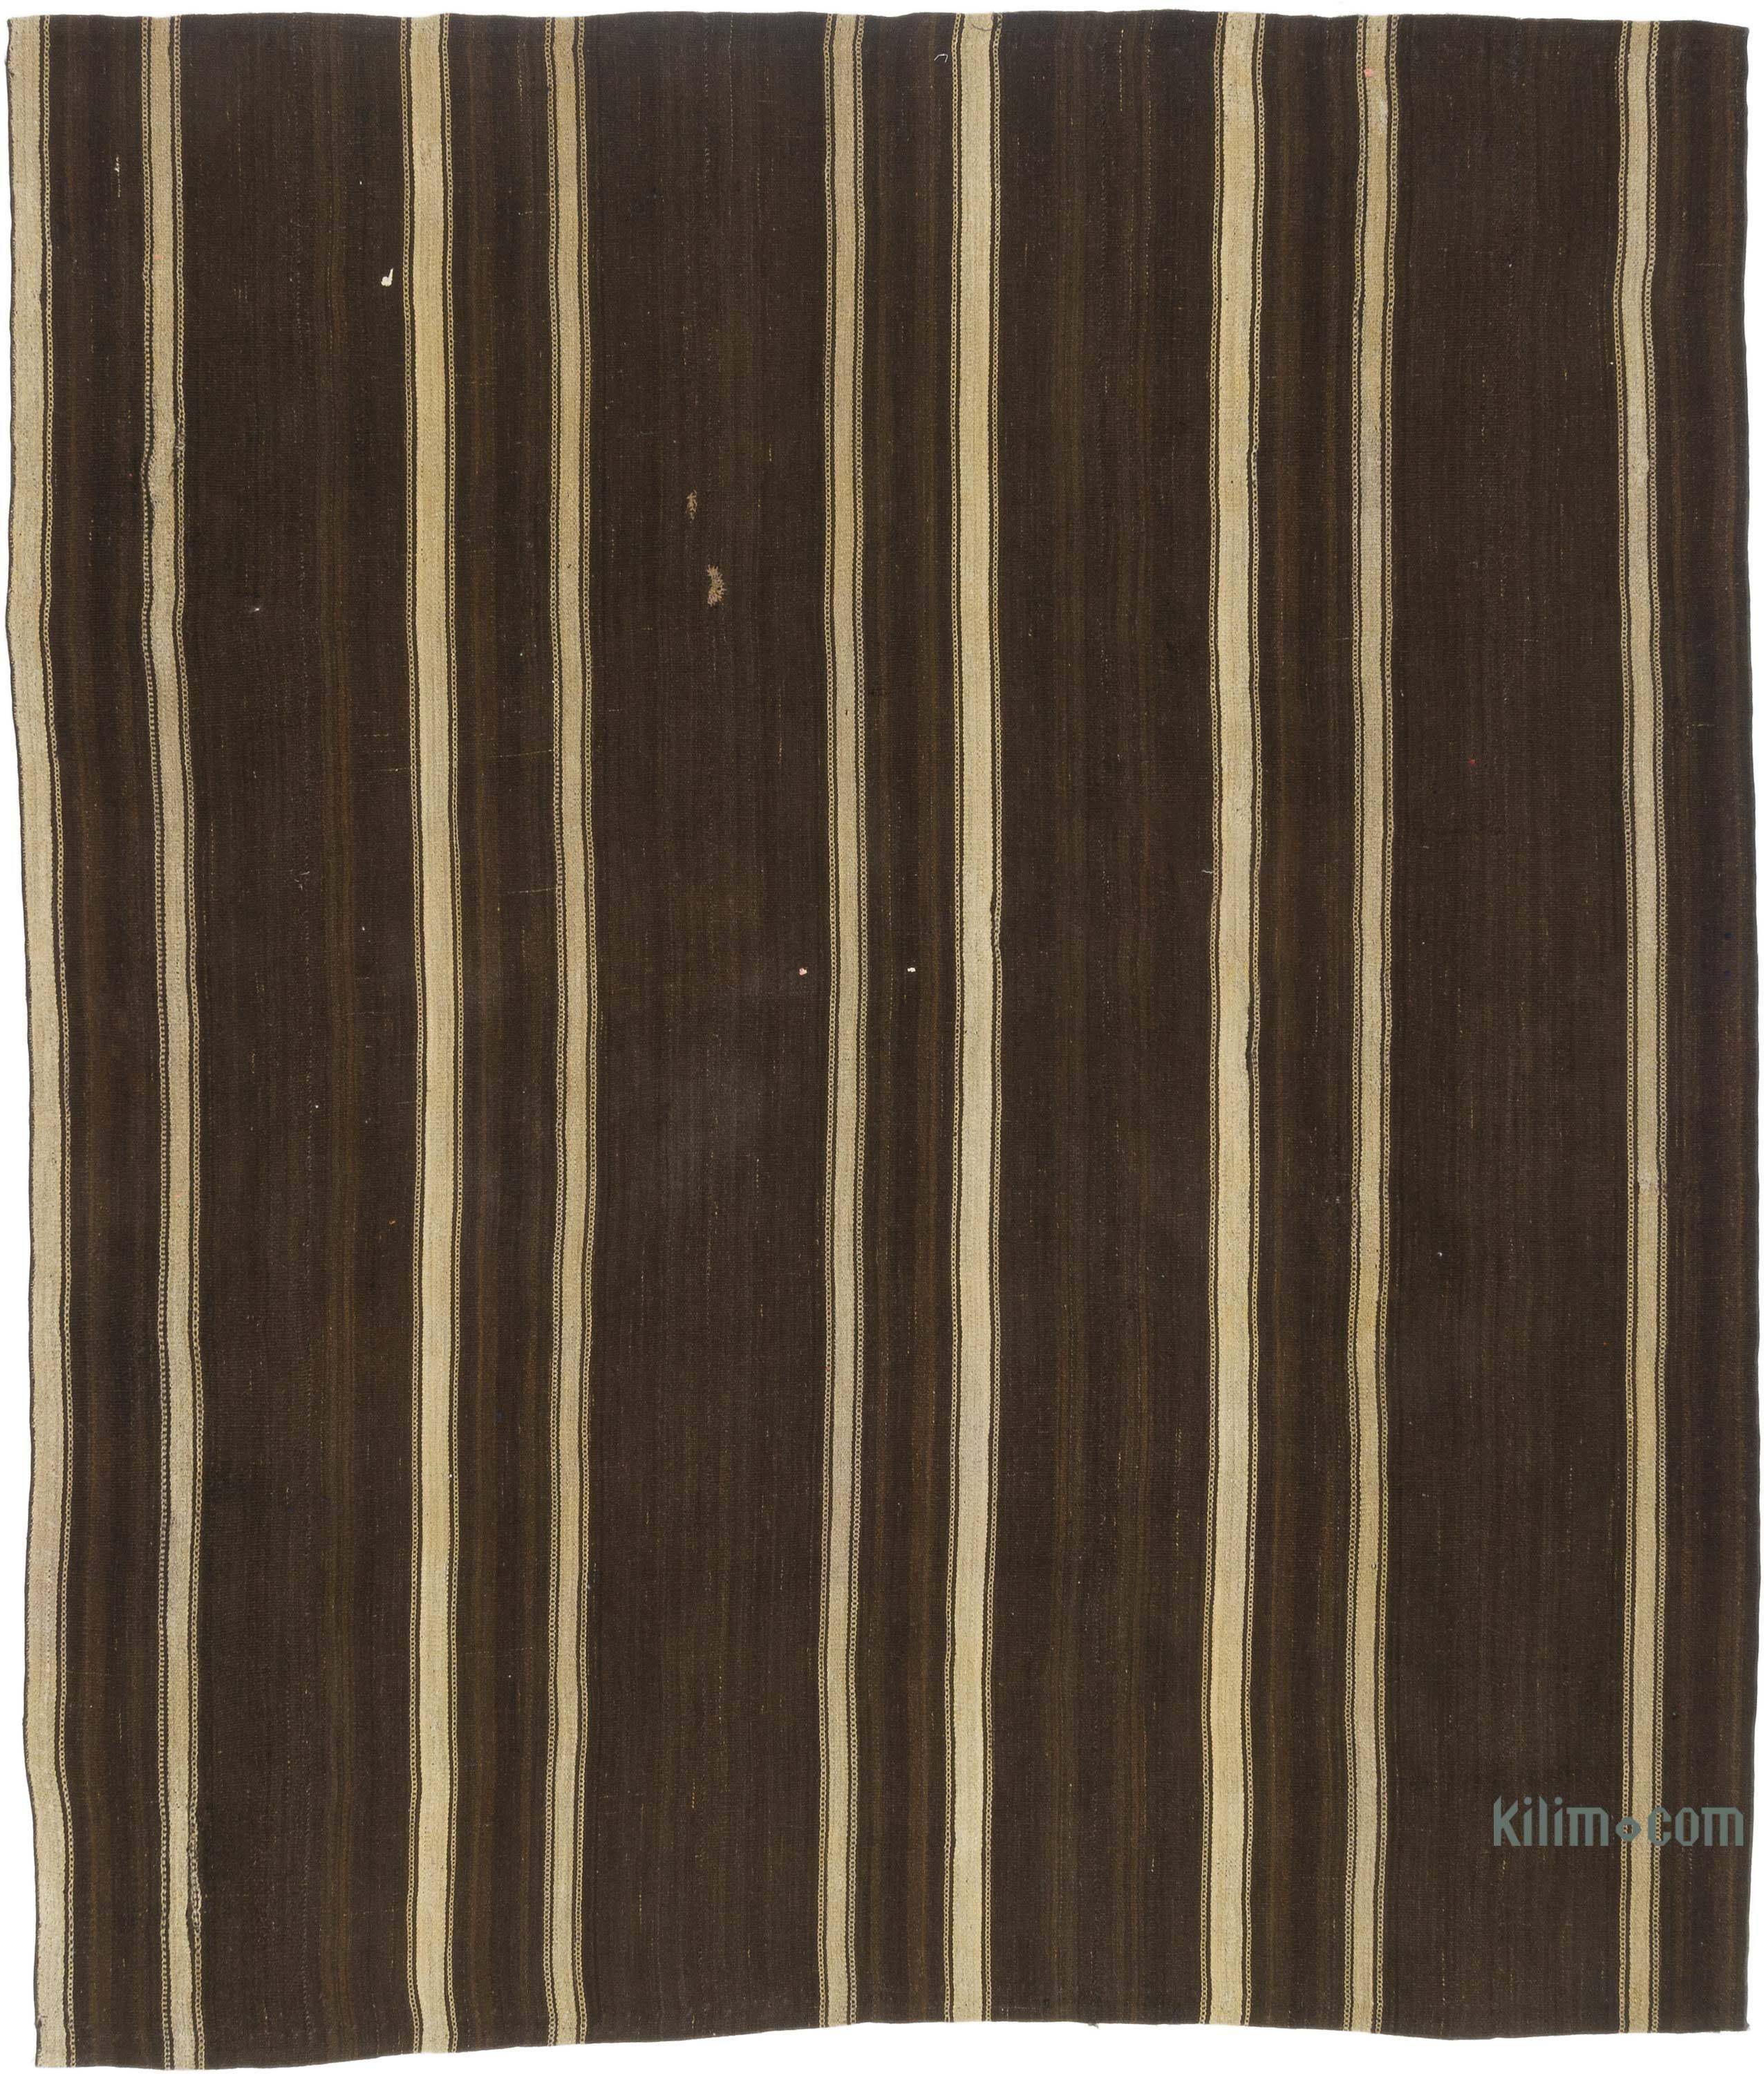 K0061907 Vintage Anatolian Kilim Rug - 7' 7 x 9' (91 x 108